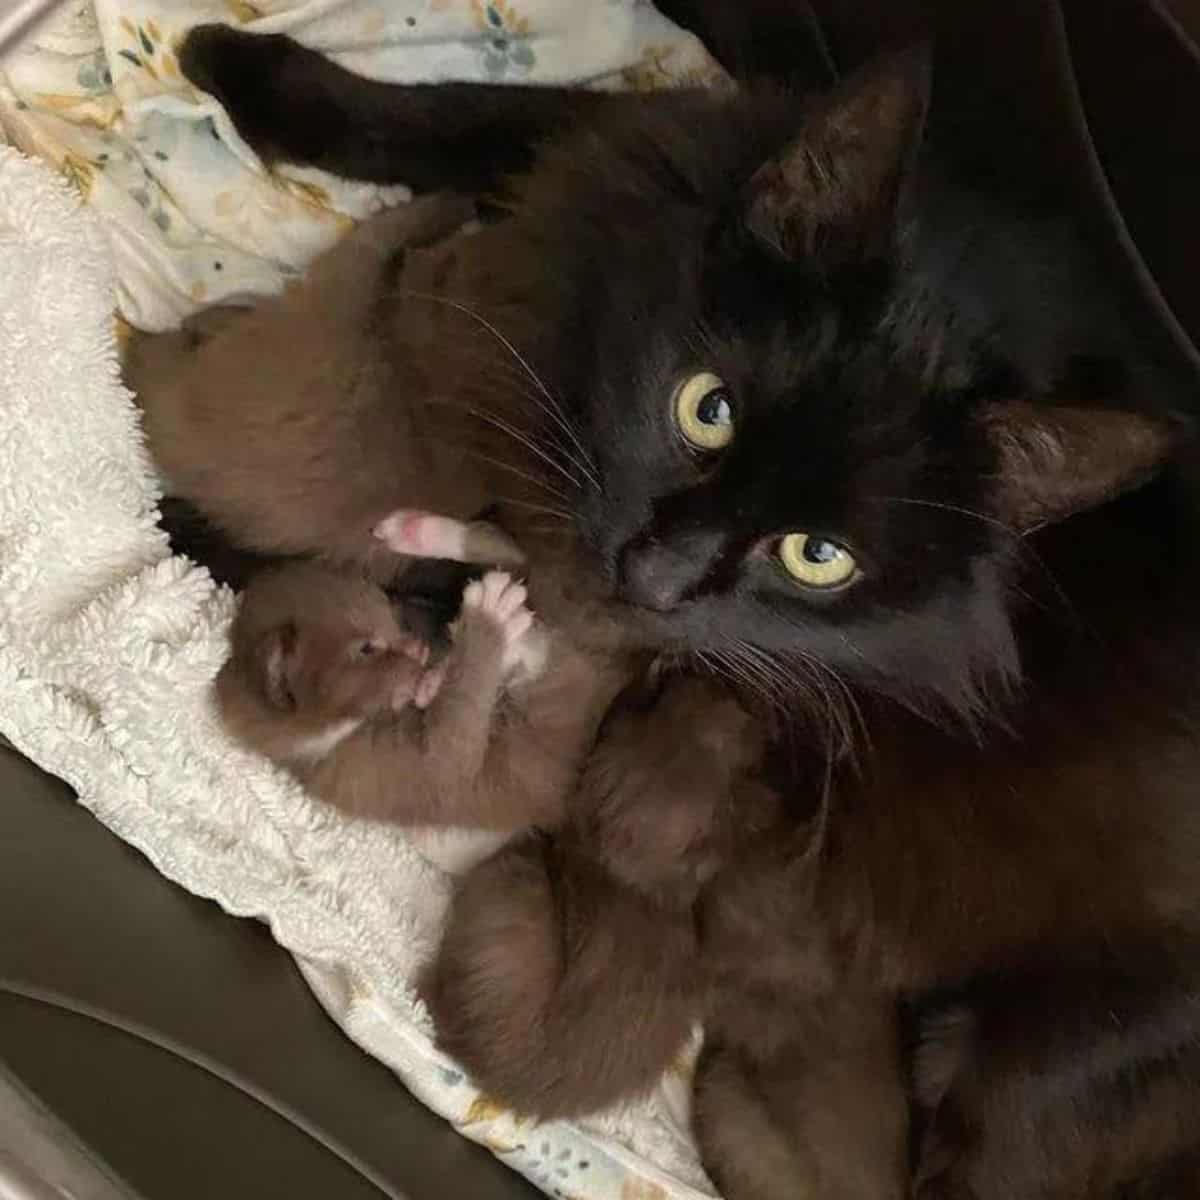 brown kittens suckling their mother